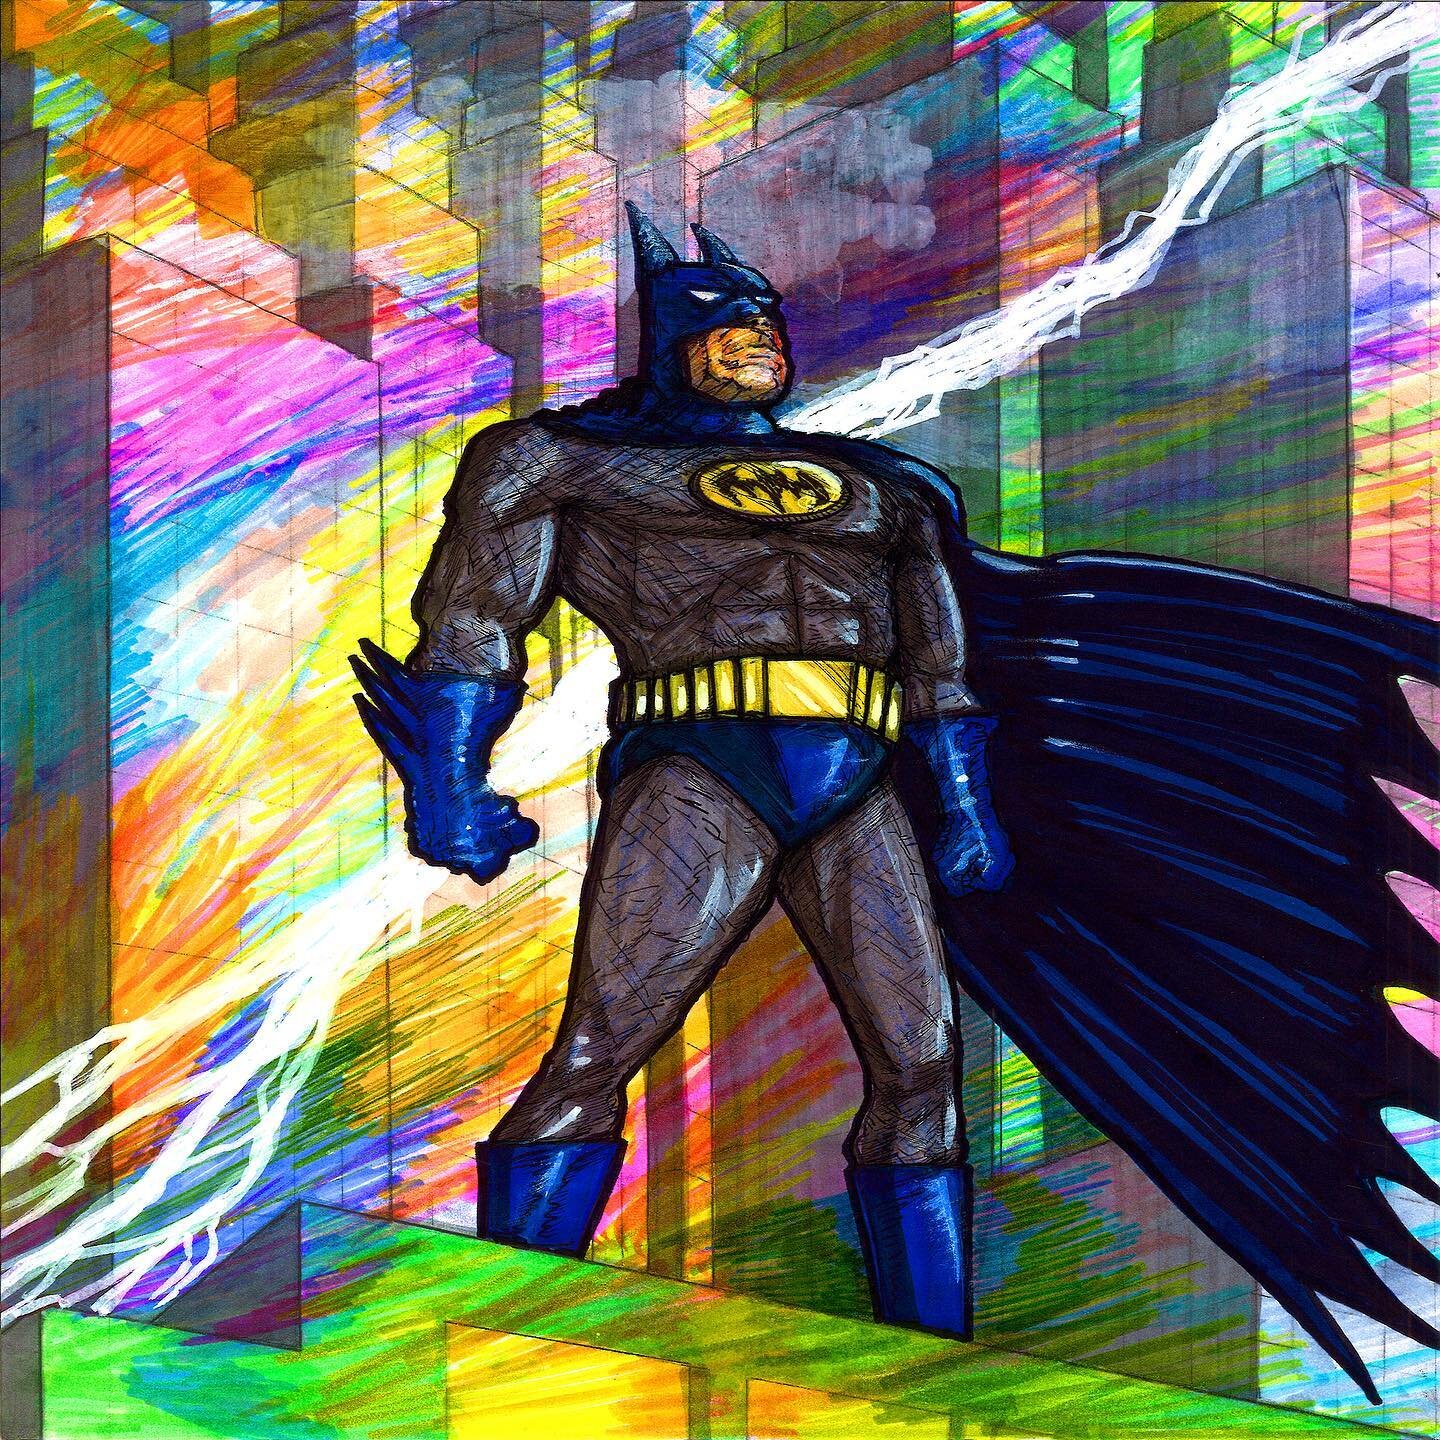 &ldquo;September 5, 1992&rdquo;

#Batman #BatmanTheAnimatedSeries #BatmanTAS #1990s #90s #nineties #dc #dccomics #dcuniverse #dcu #superheroes #superhero #comicbook #comics #art #artist #arts #artwork #draw #drawing #illustration #gallery #creativity